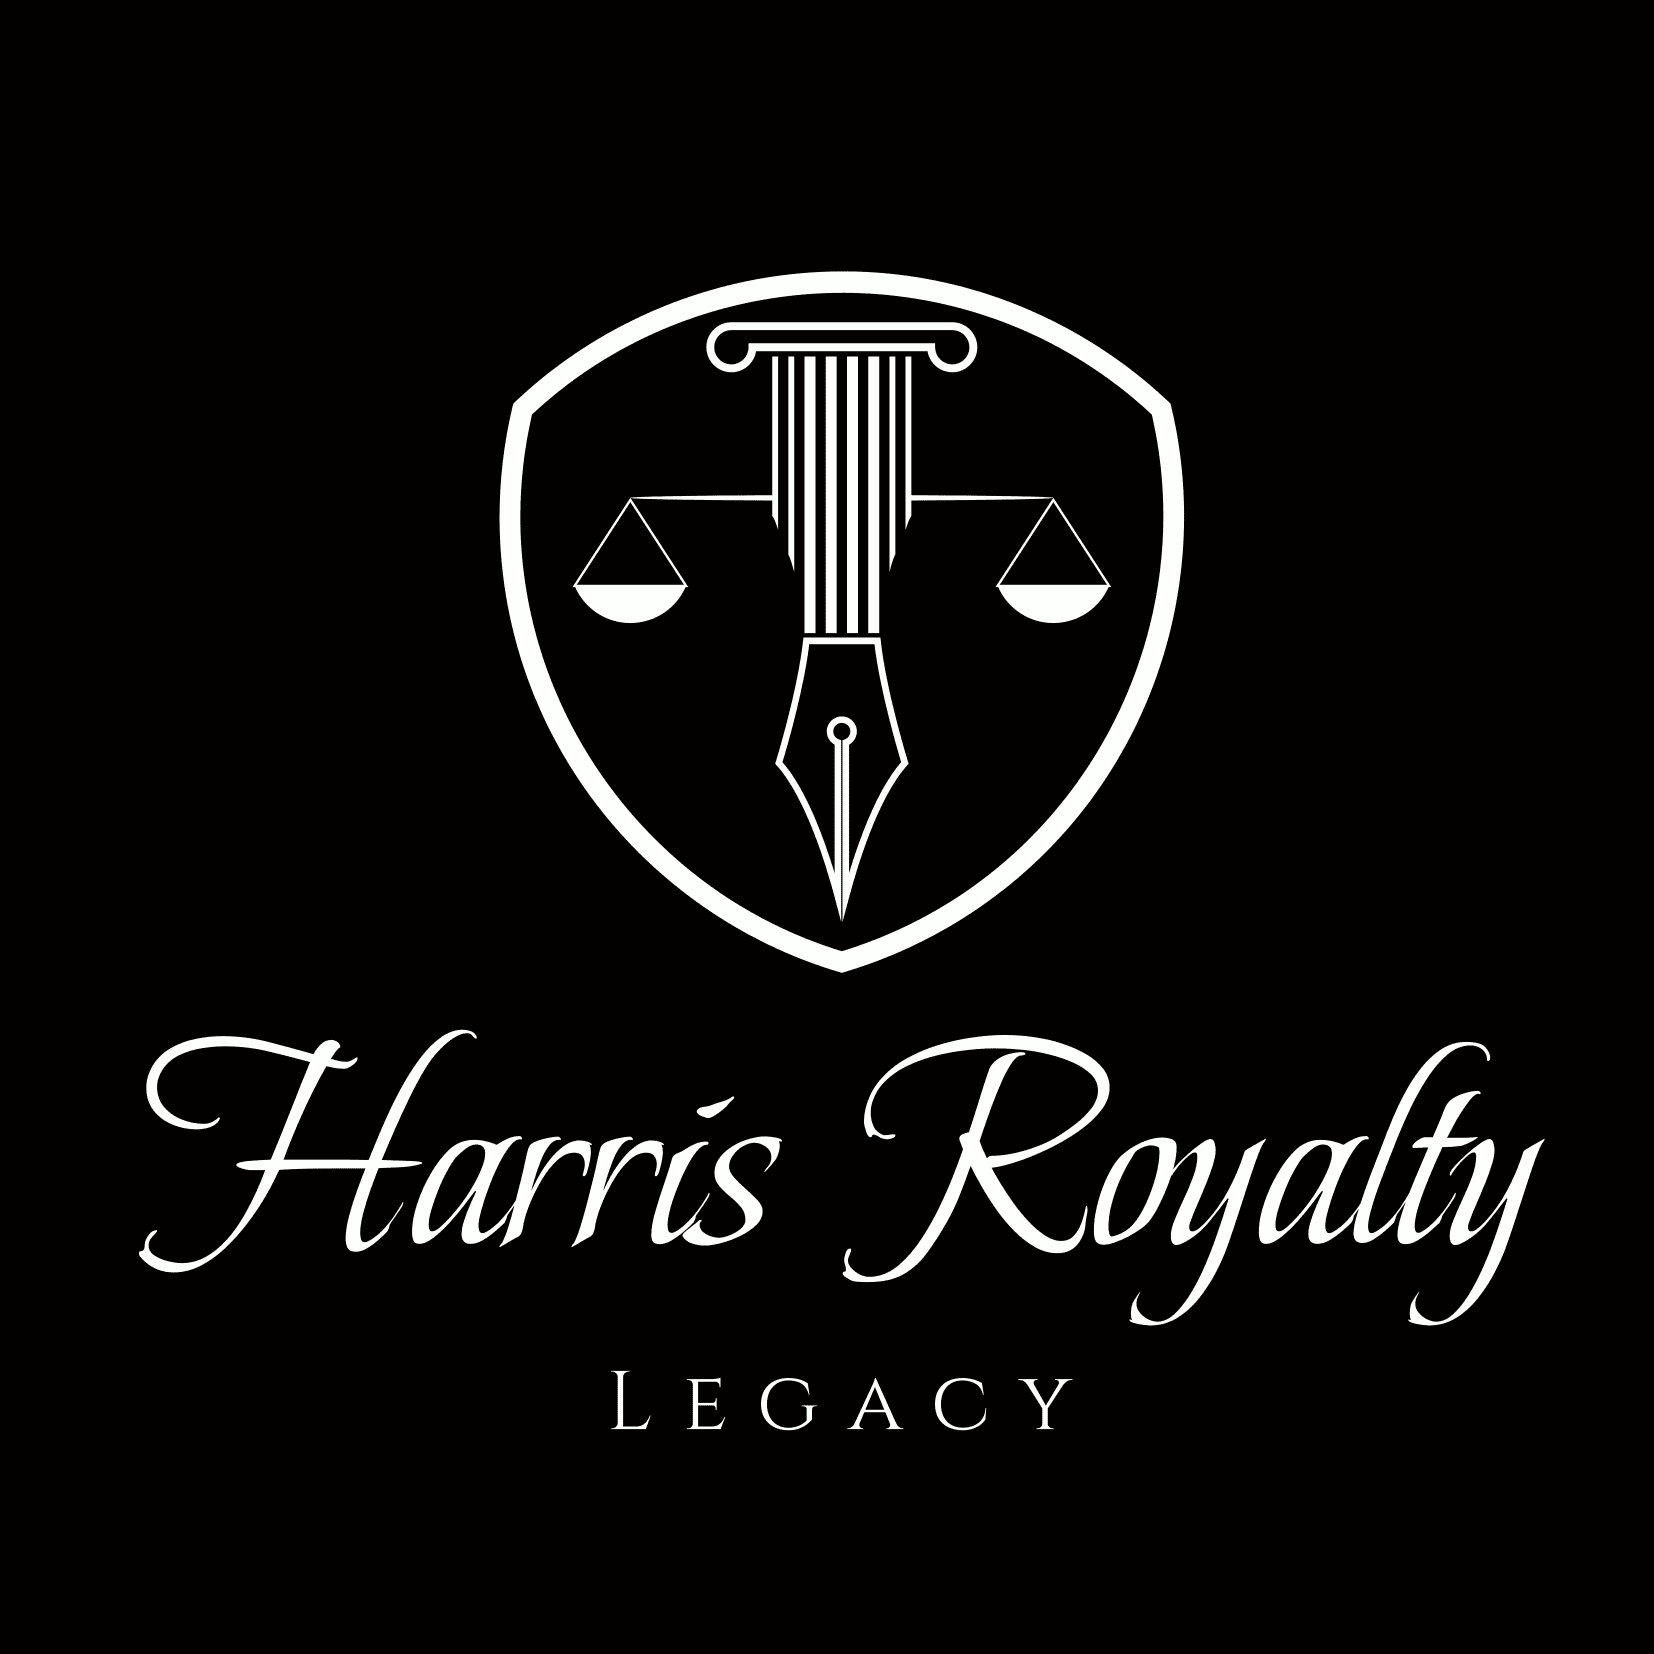 Harris Royalty